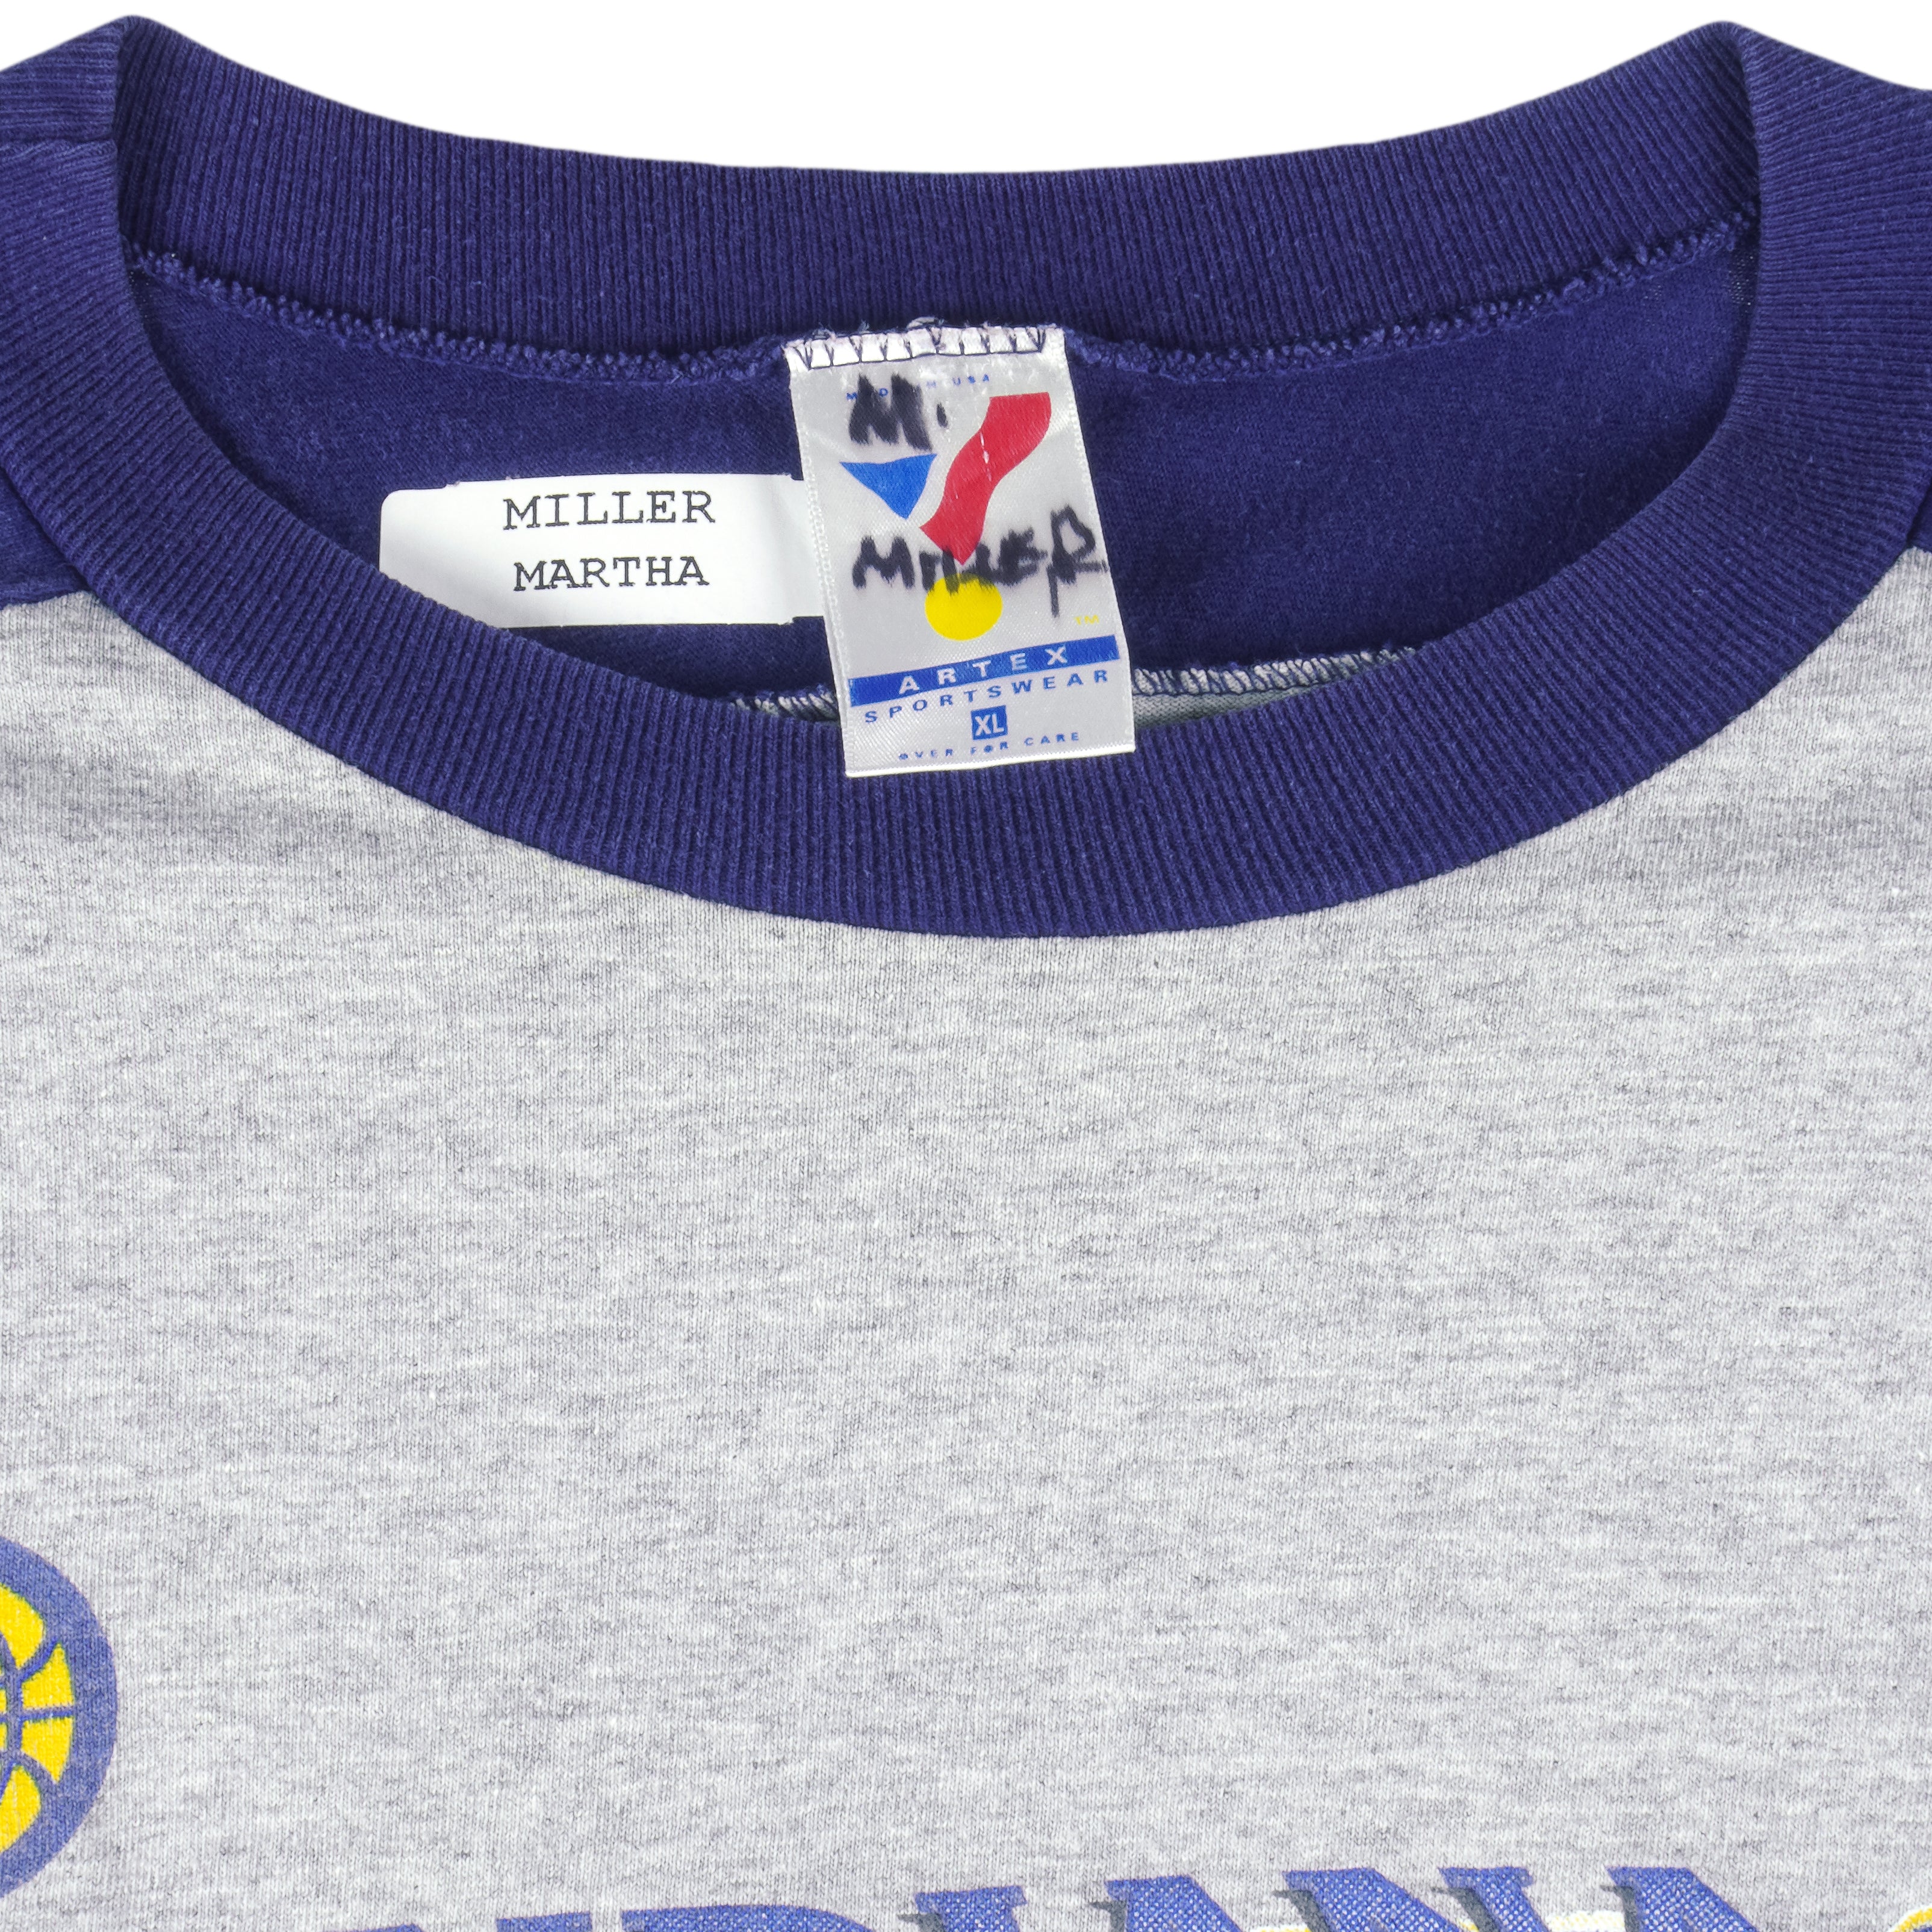 Starter Jacket Pull Over Coat NBA Indiana Pacers Basketball Big Logo XXL  Vintage